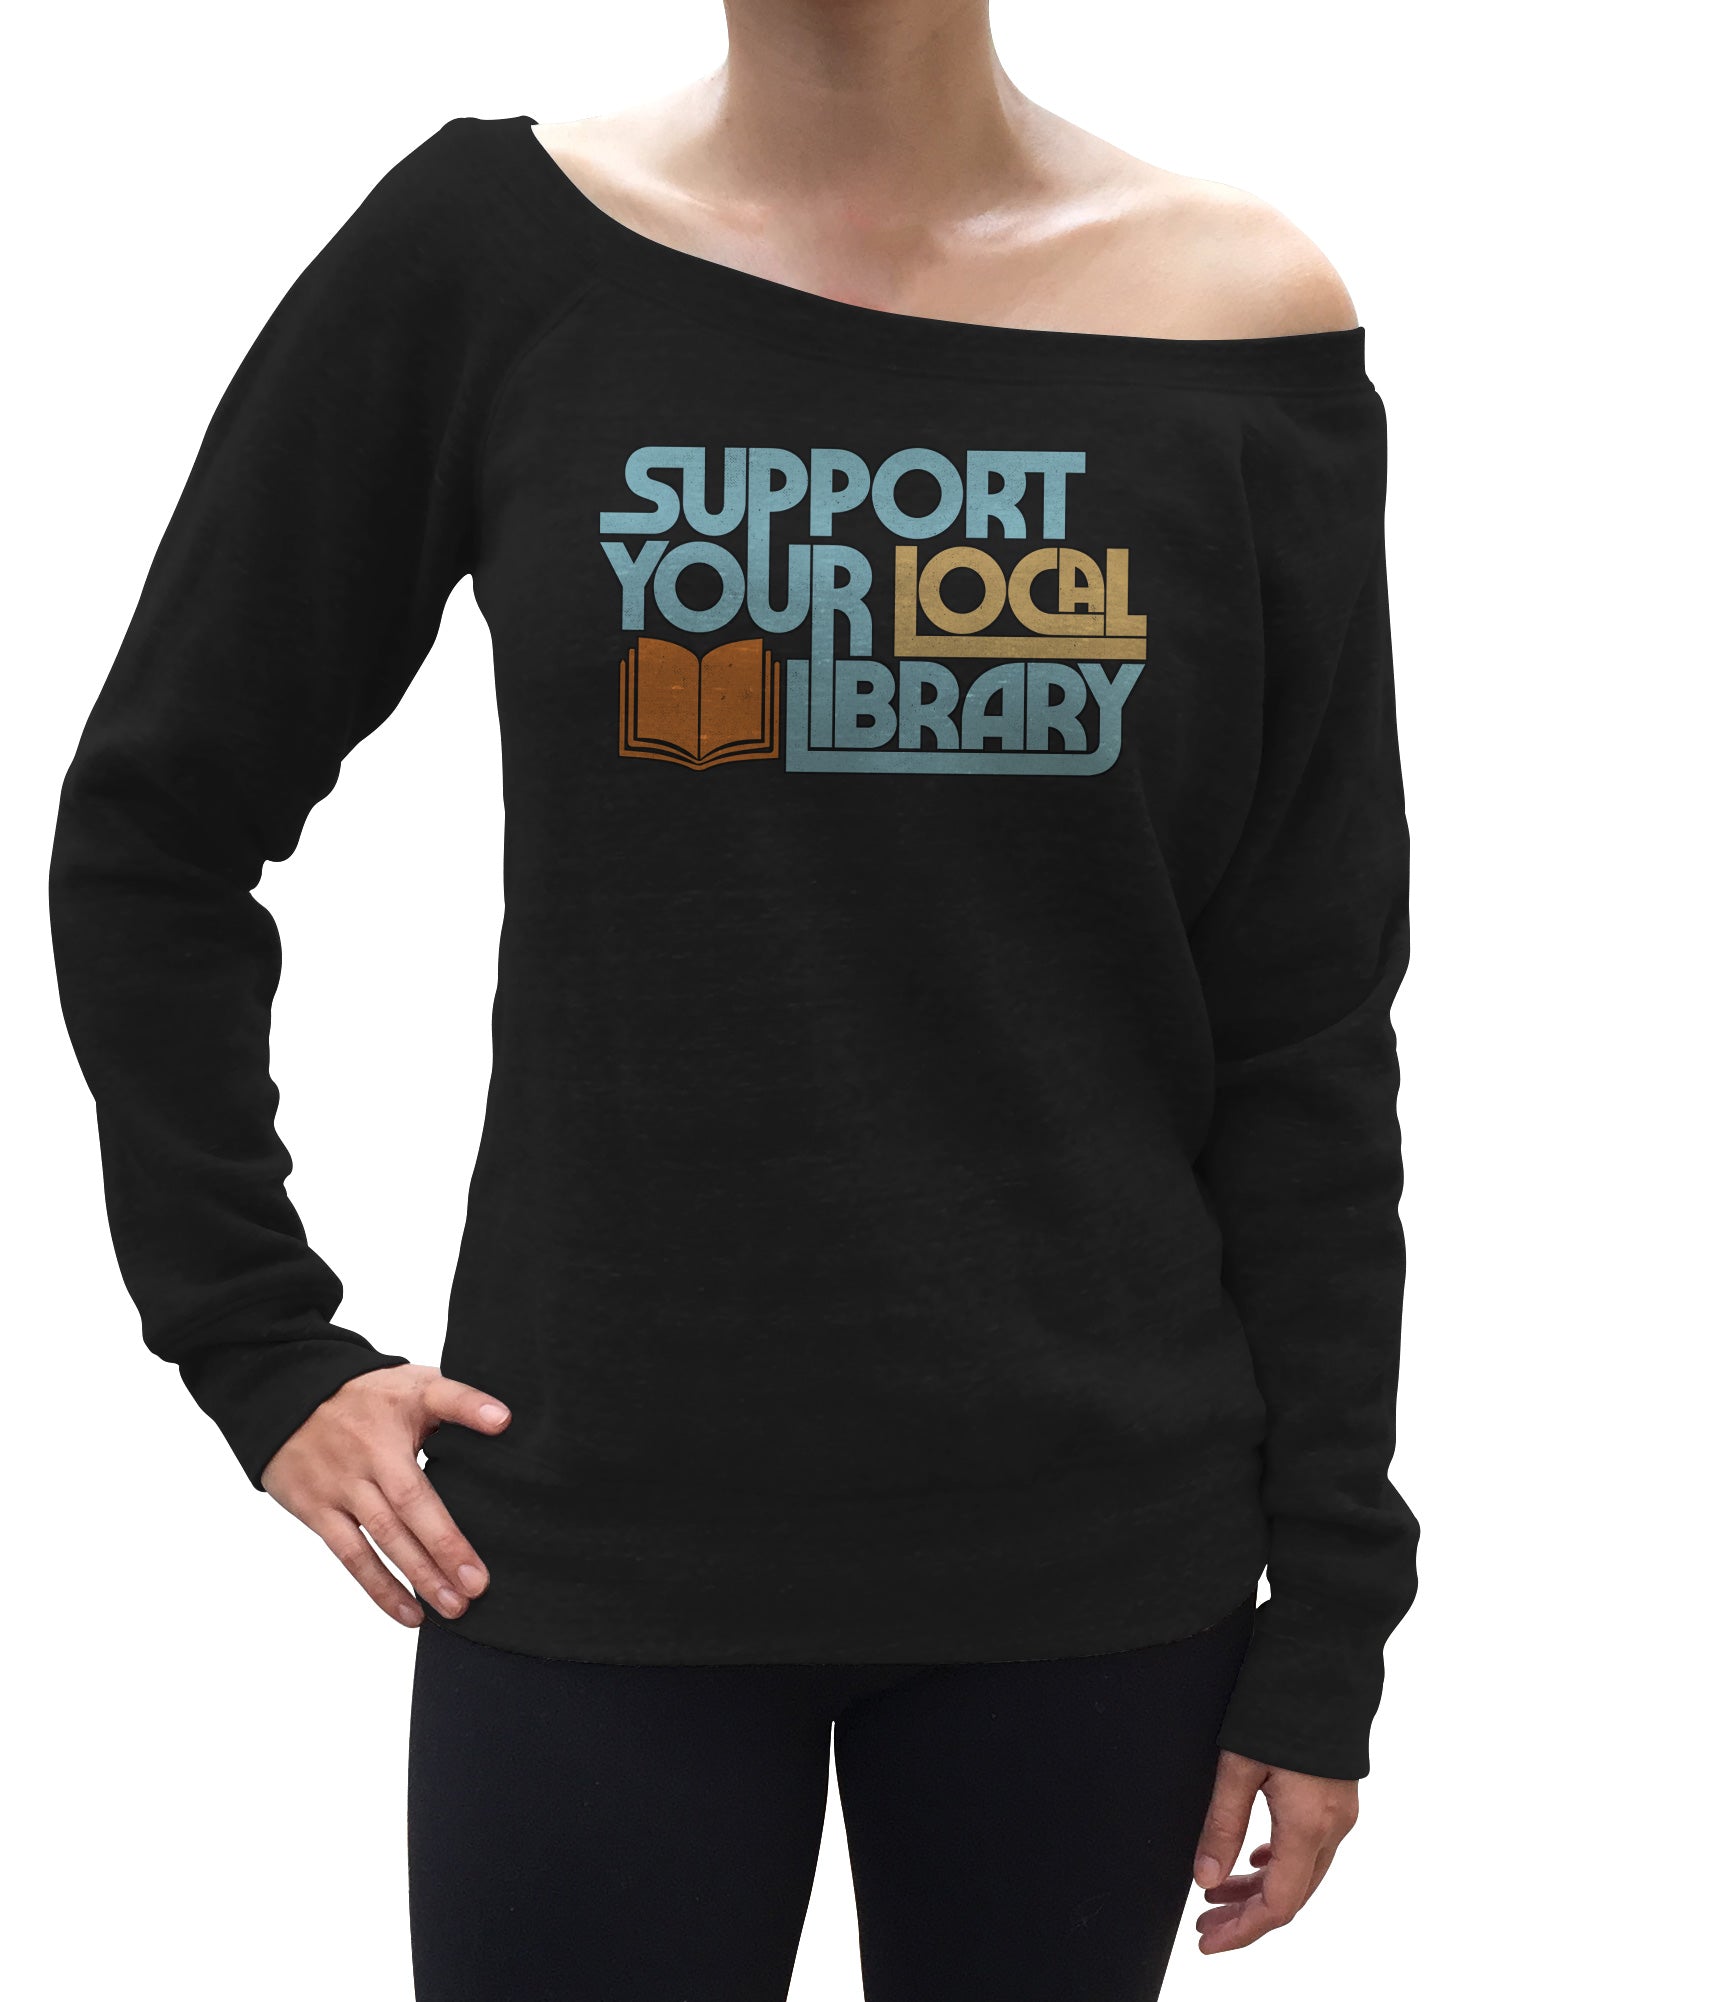 Women's Support Your Local Library Scoop Neck Fleece